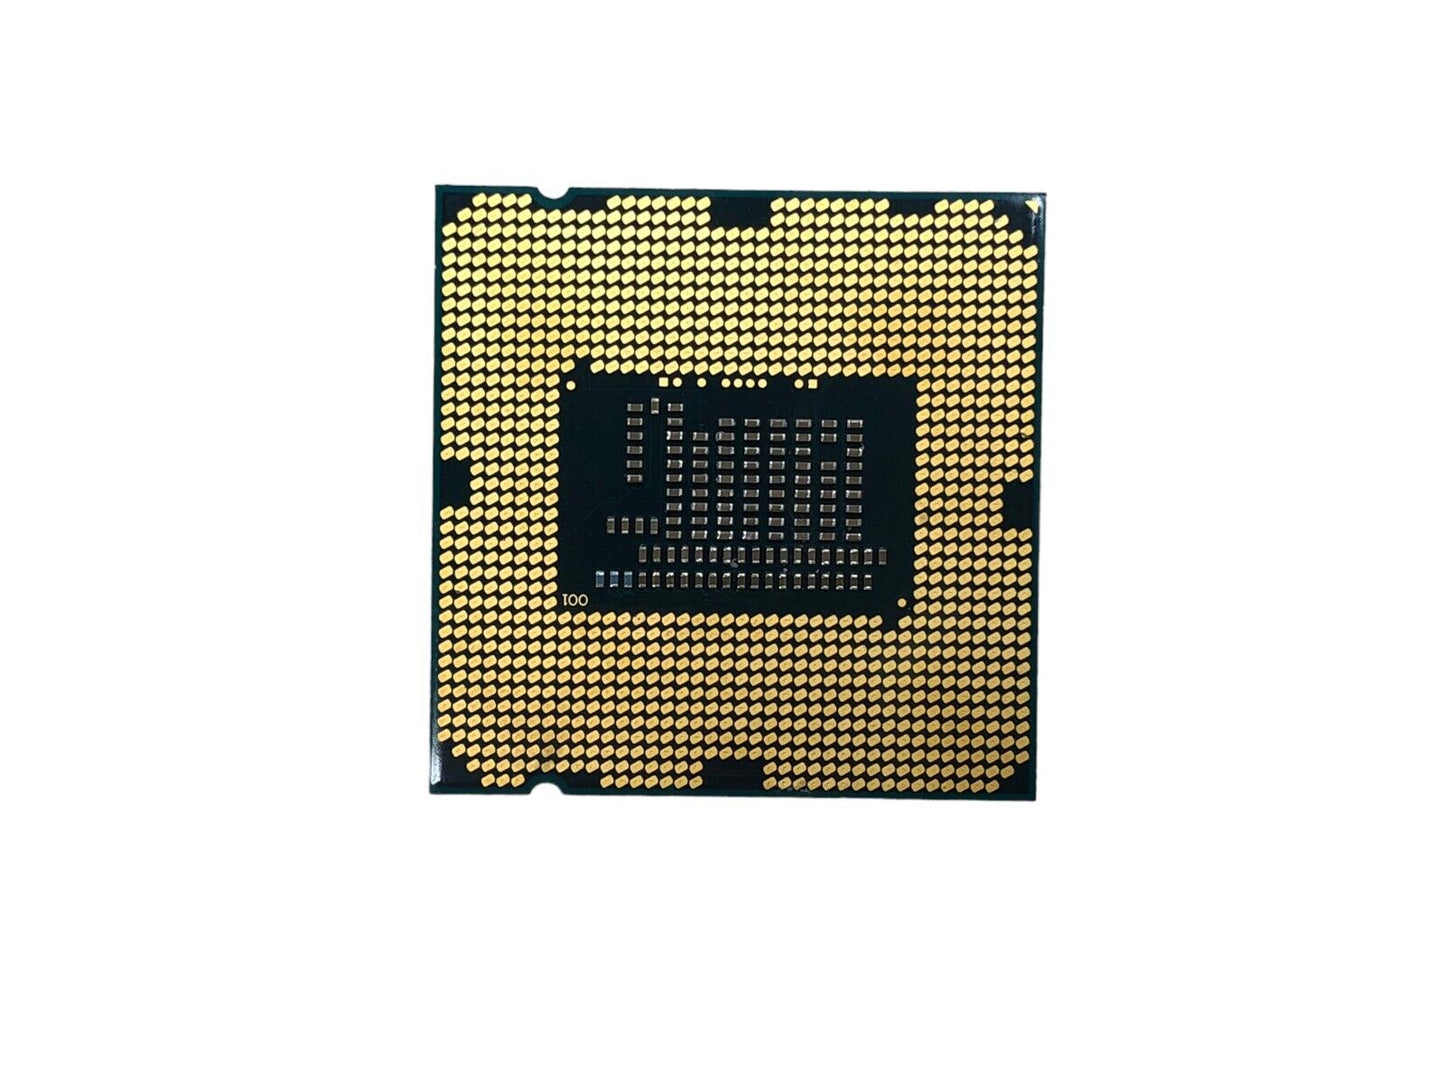 Lot of 2 Intel Pentium G2130 SR0YU 3.2GHz Dual-Core Processor